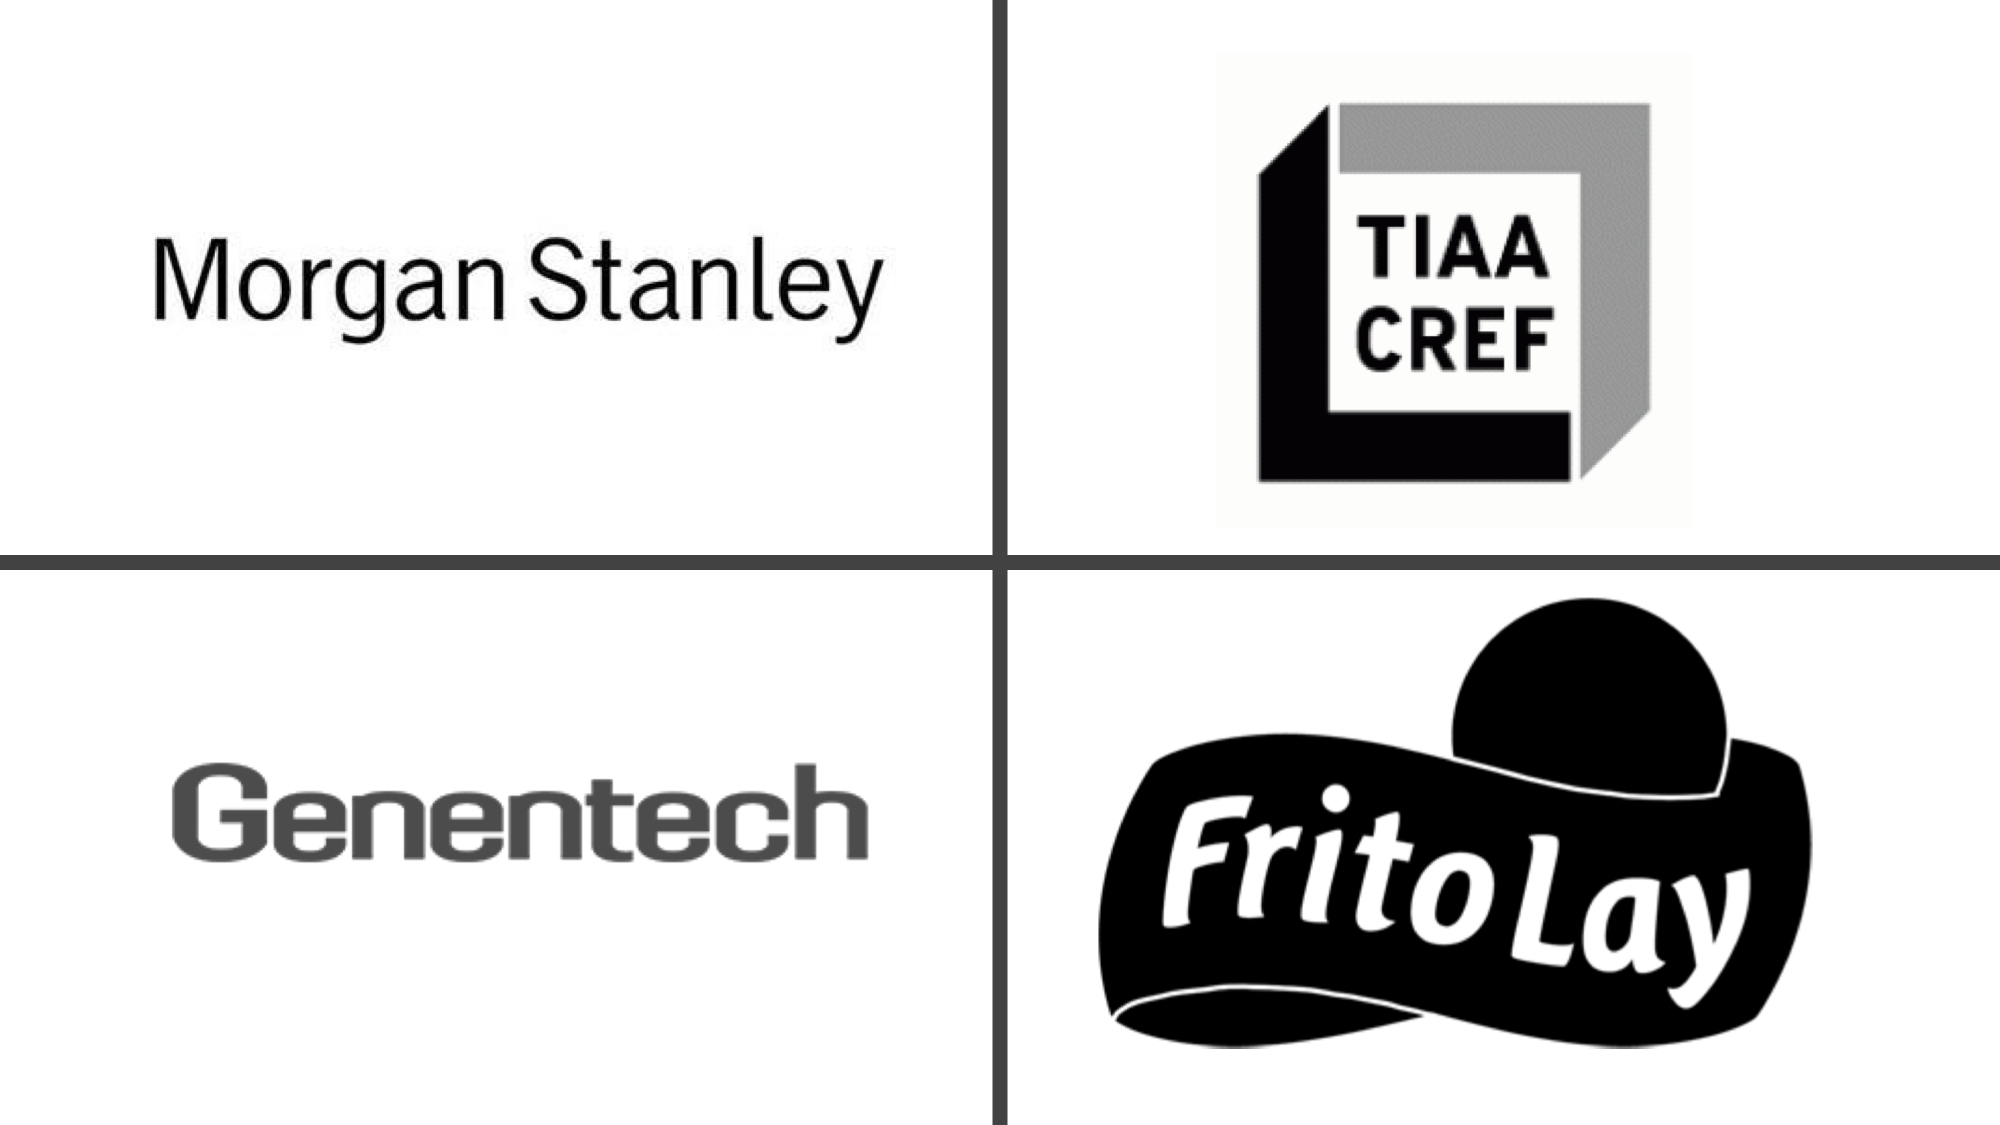 Corporate logos